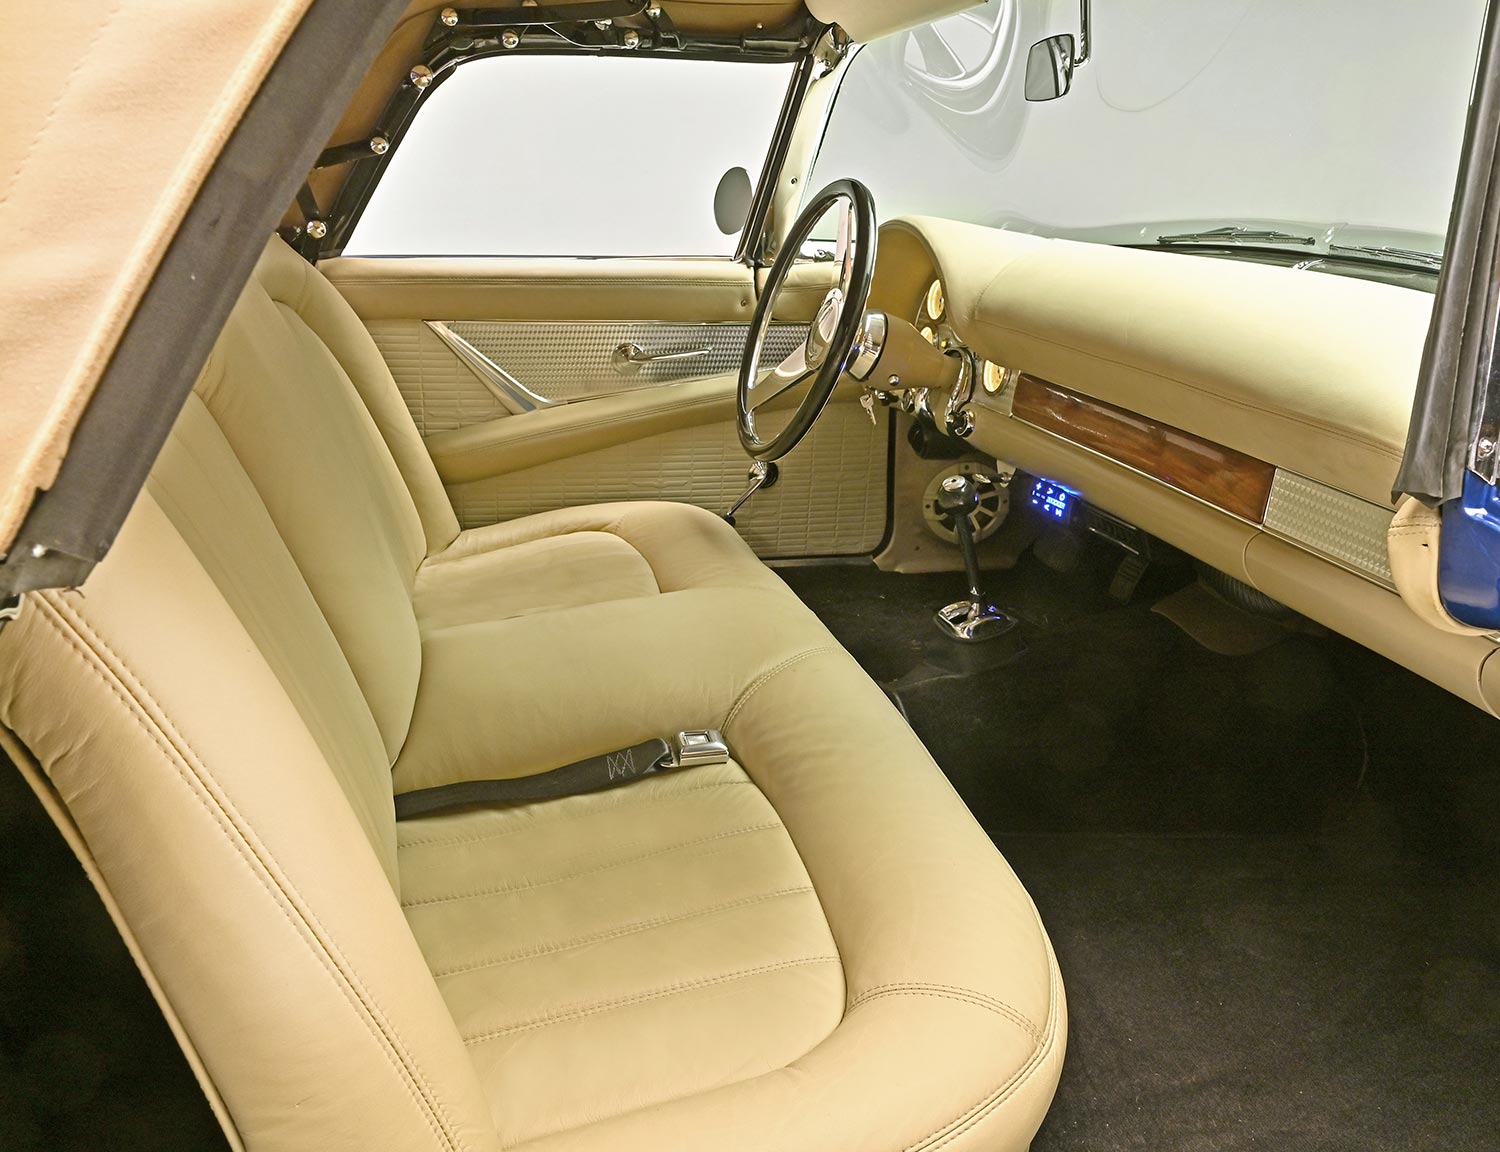 view through the open passenger door of the ’55 Thunderbird convertible's seating